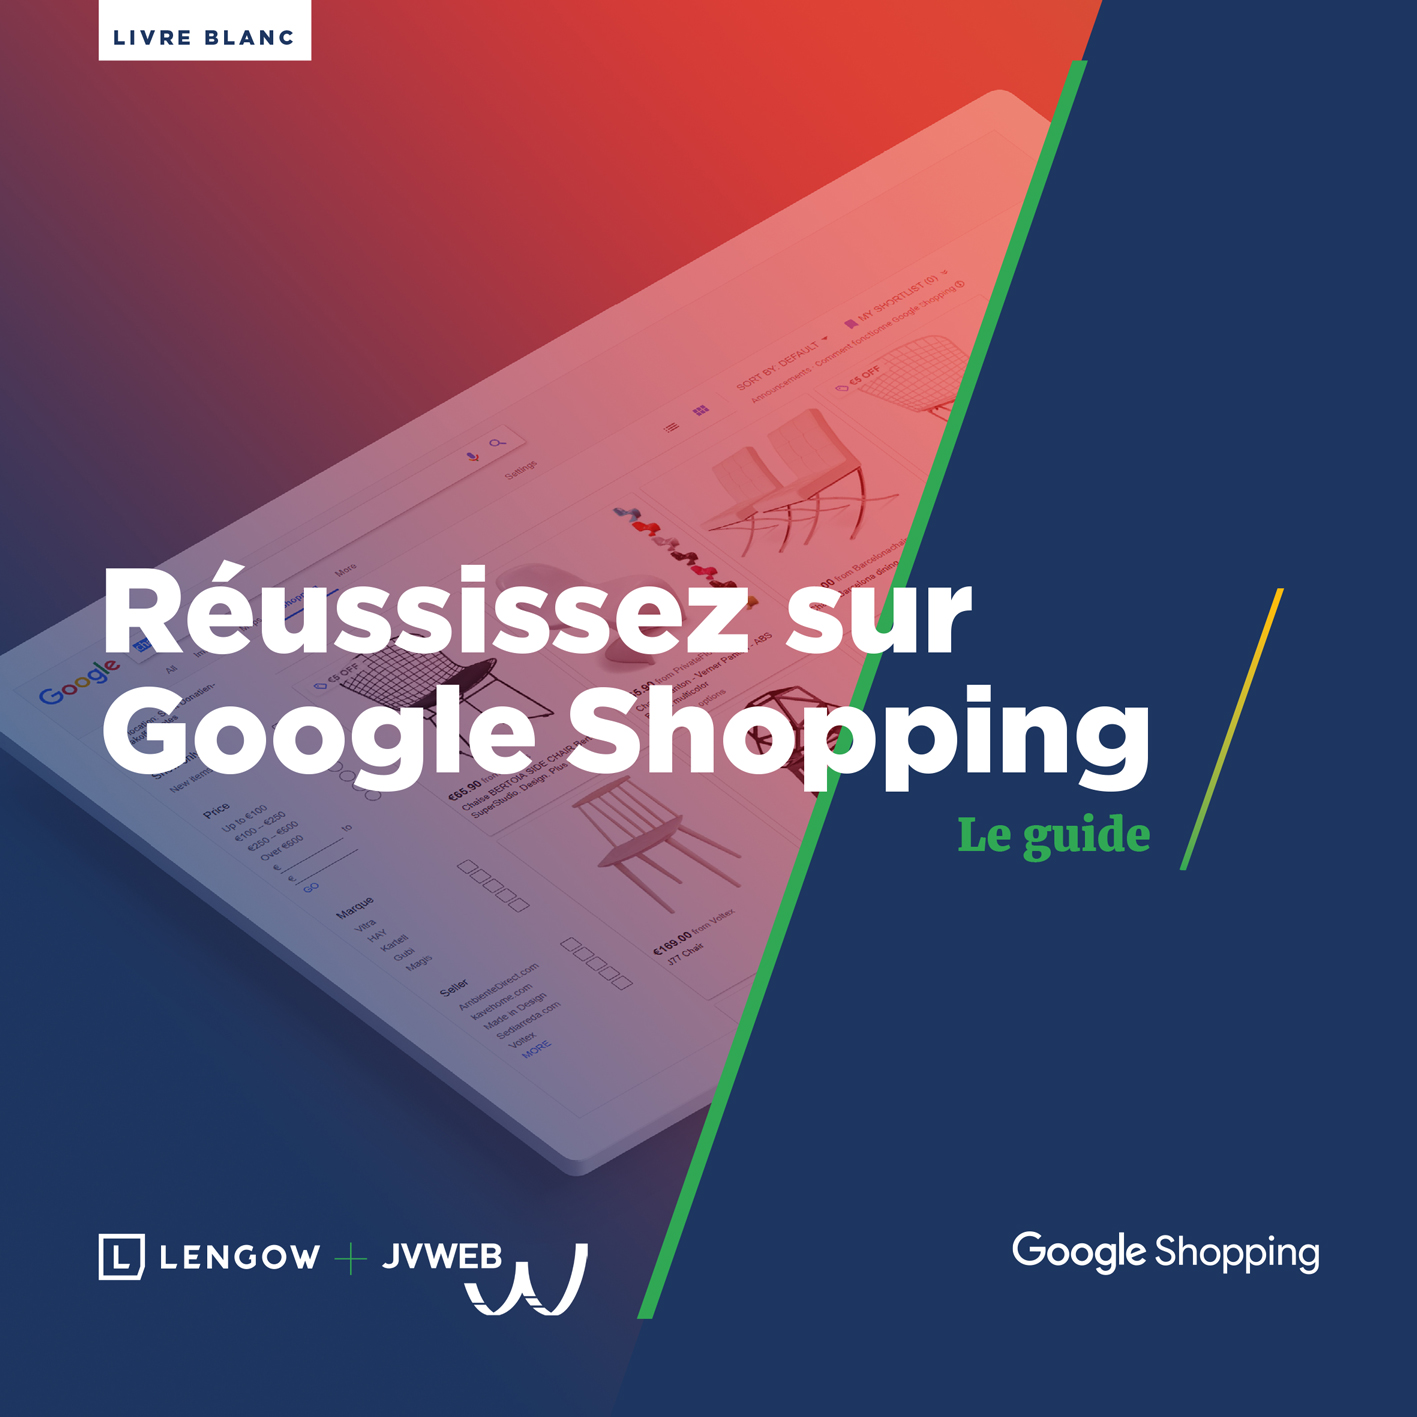 Livre blanc Google Shopping